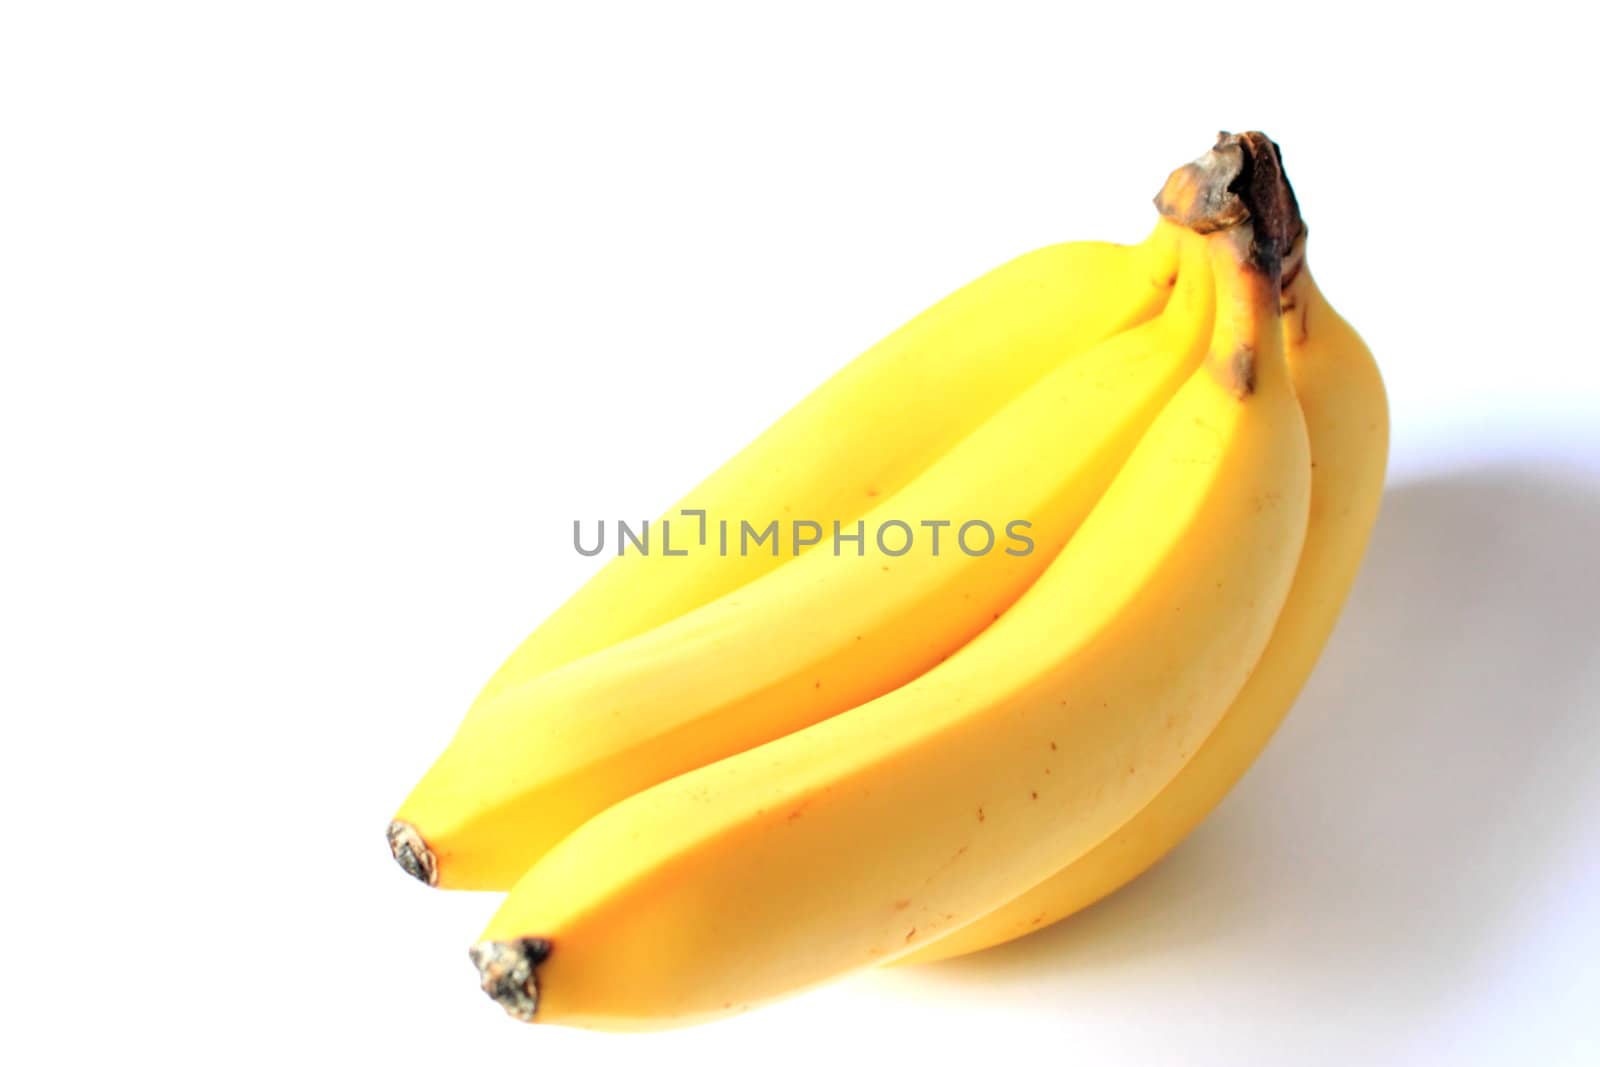 Ripe Bananas by abhbah05